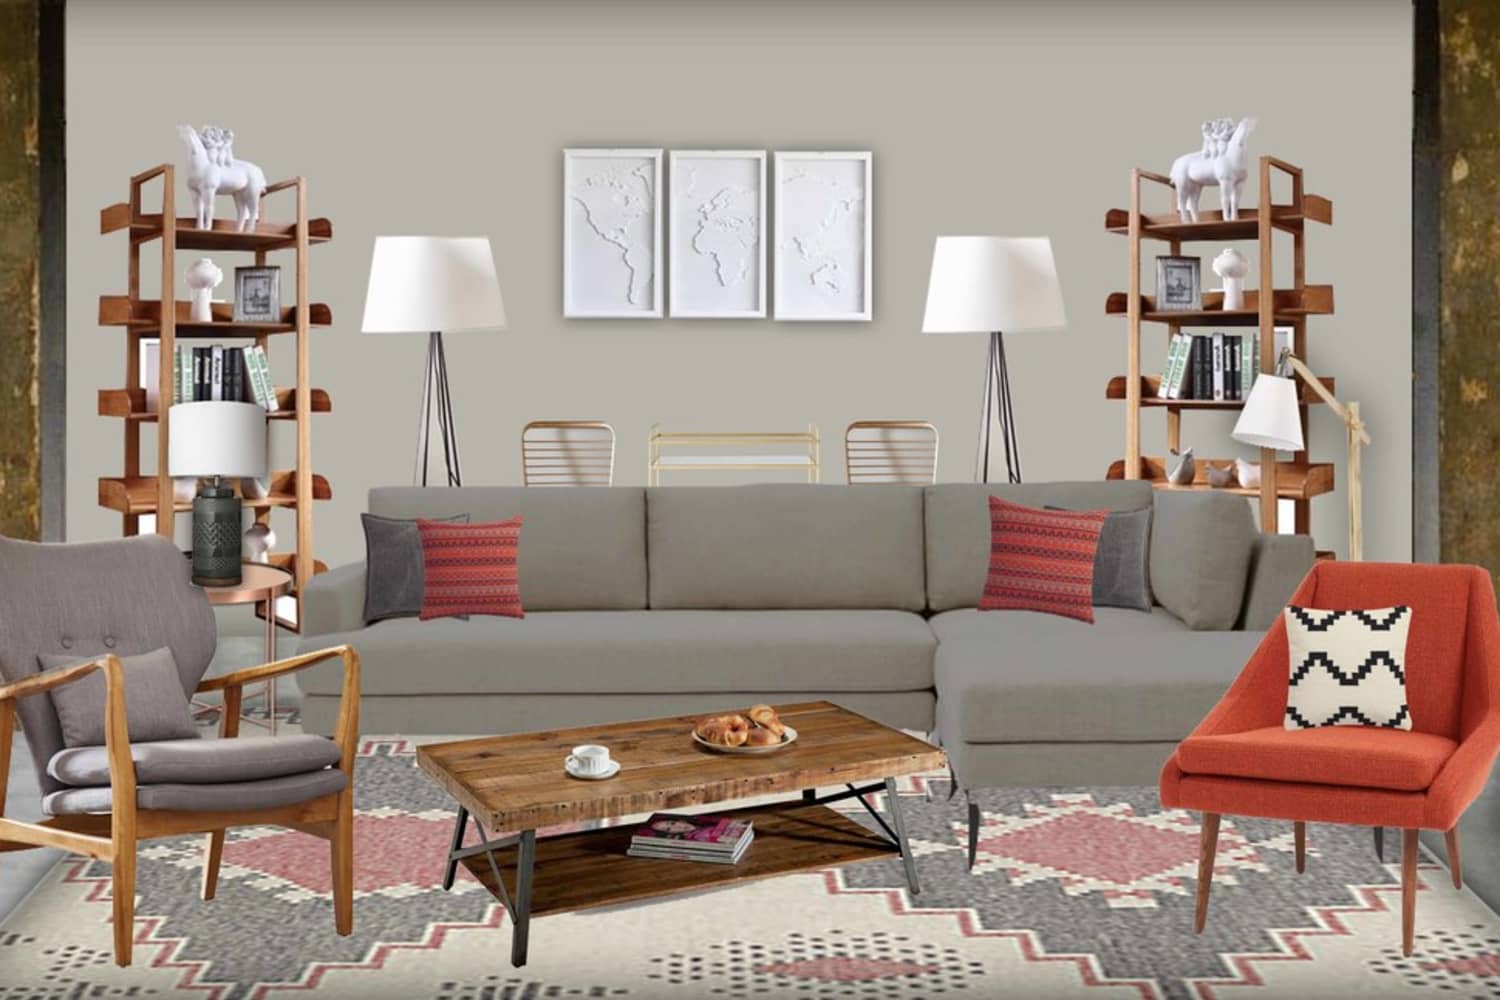 Home Depot Virtual Room Design
